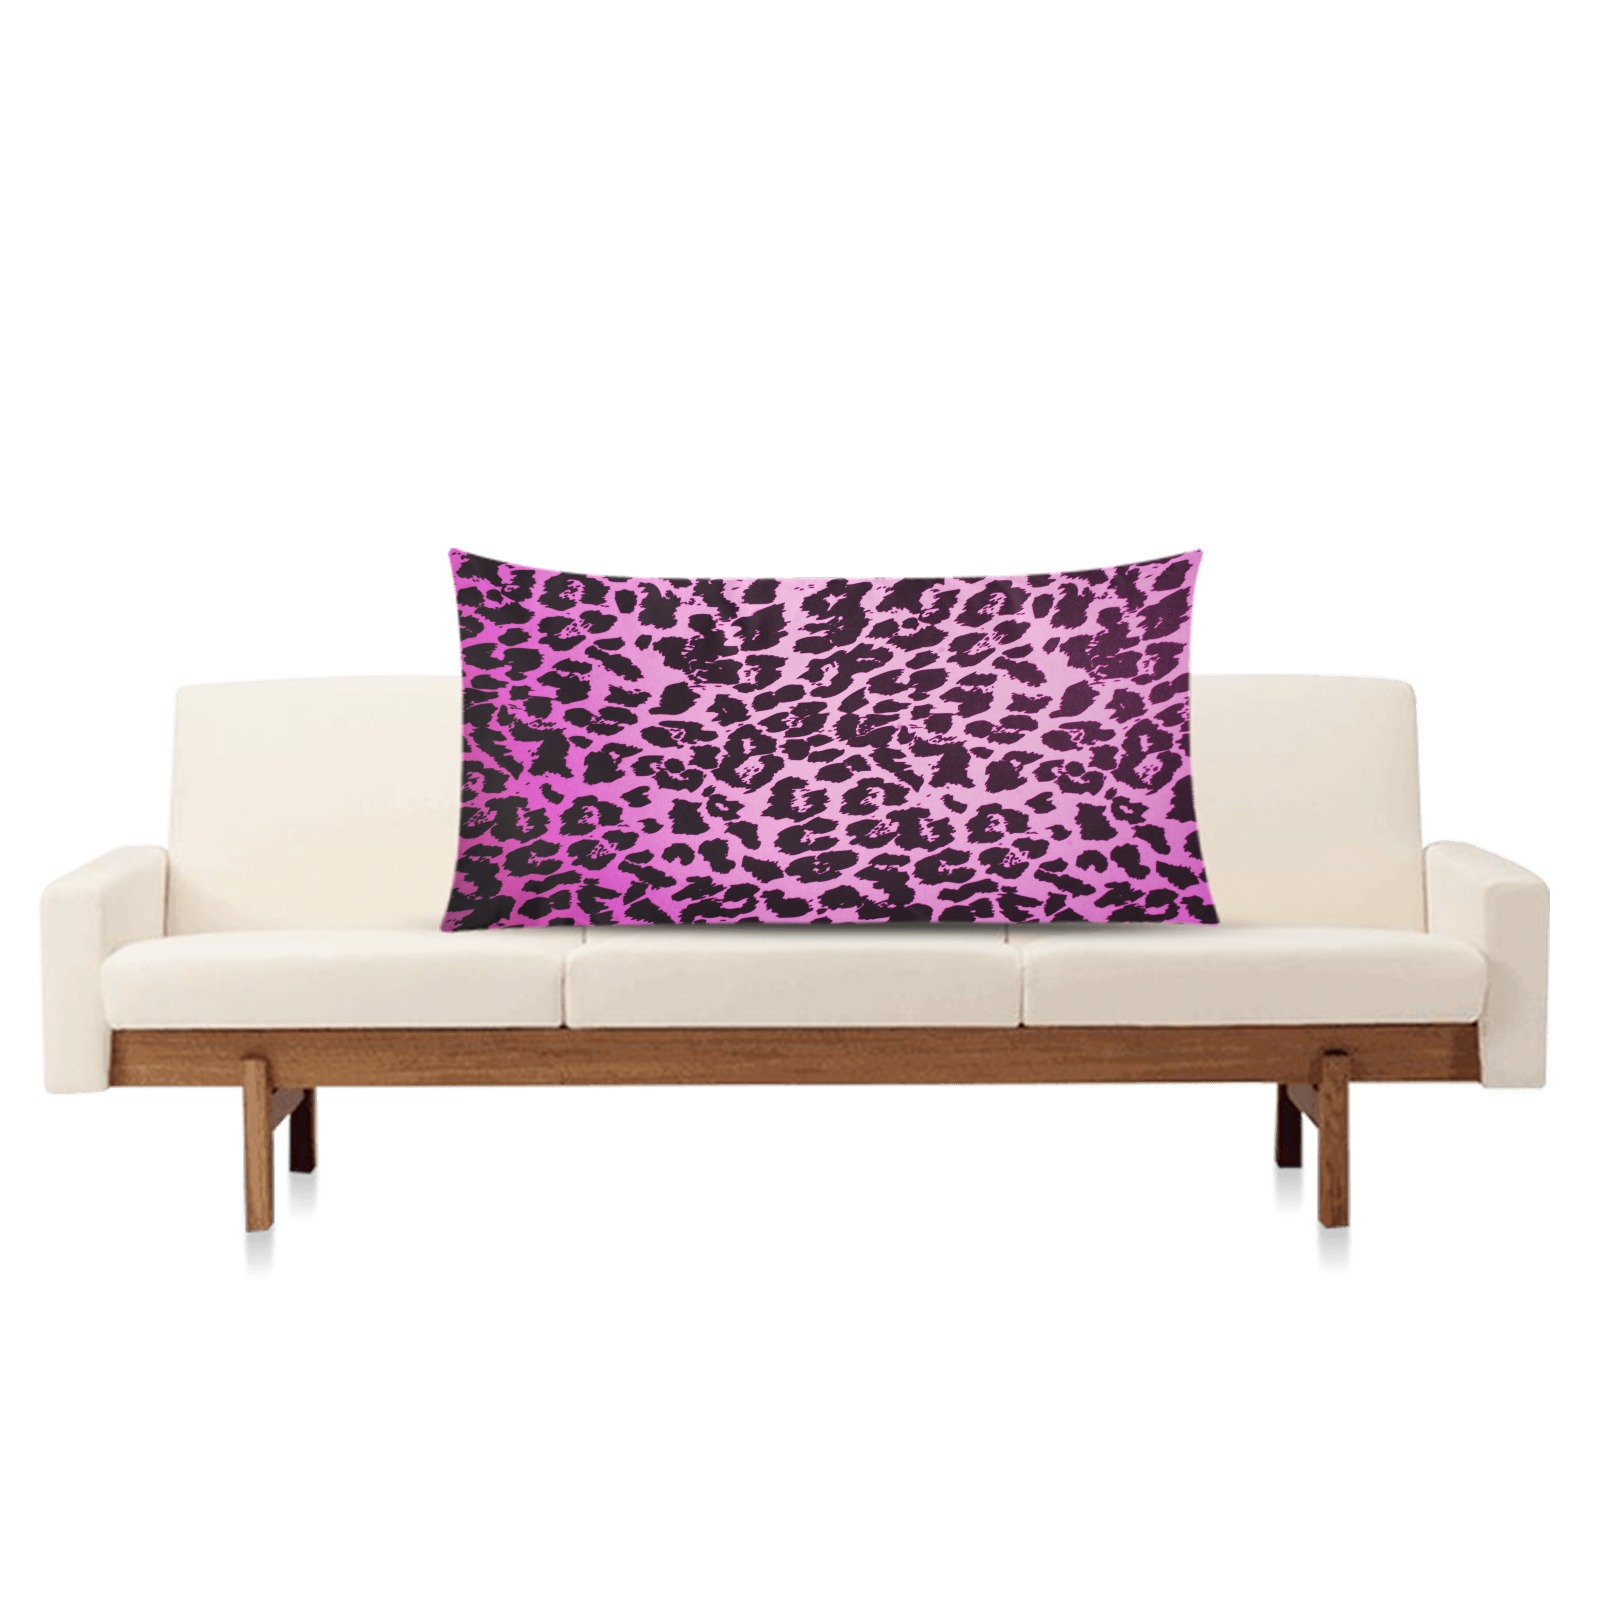 Purple Cheetah Rectangle Pillow Case 20"x36"(Twin Sides)